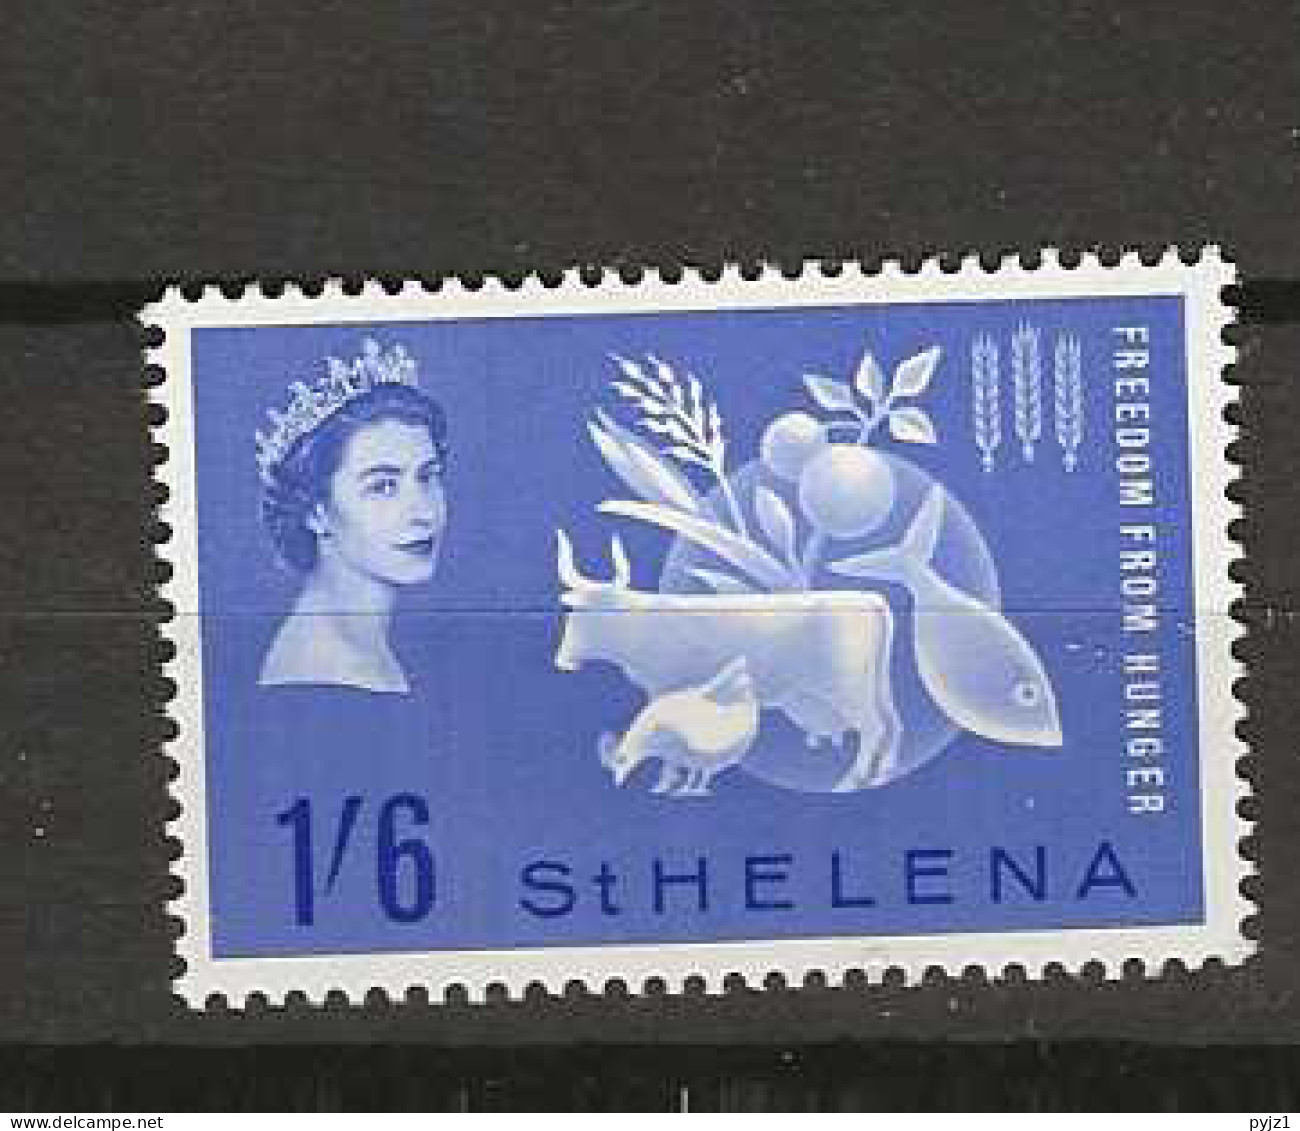 1963 MNH Saint Helena Mi 160 Postfris** - St. Helena